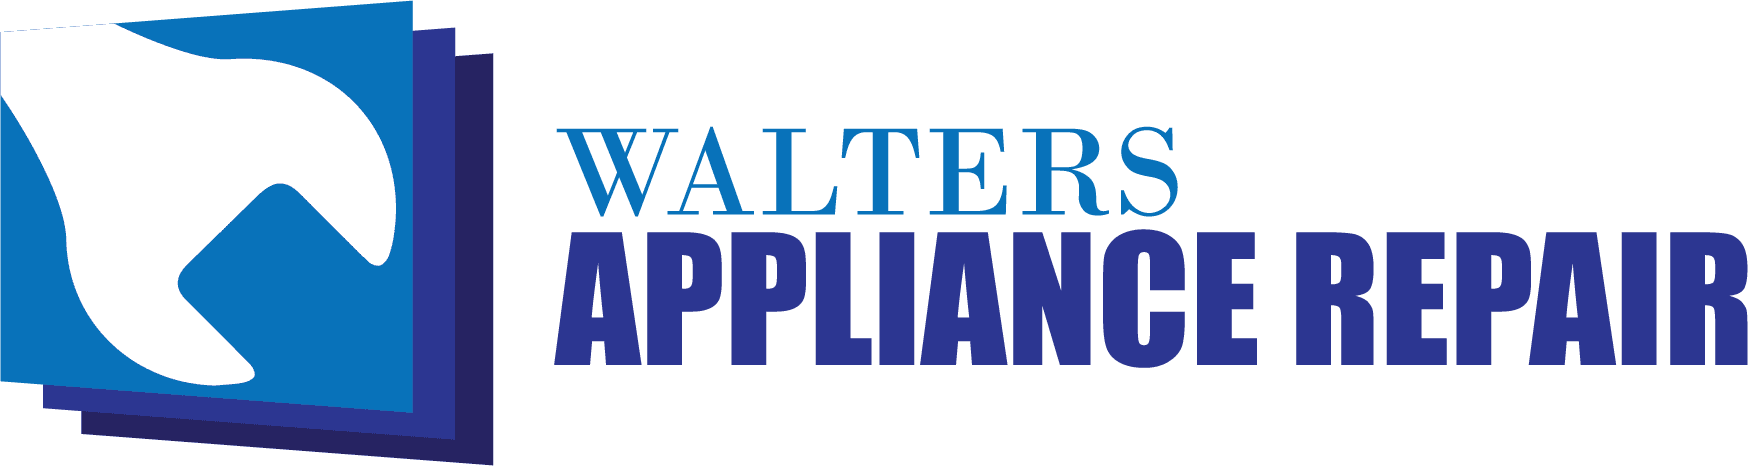 CX-71424_Walters Appliance Repair_final